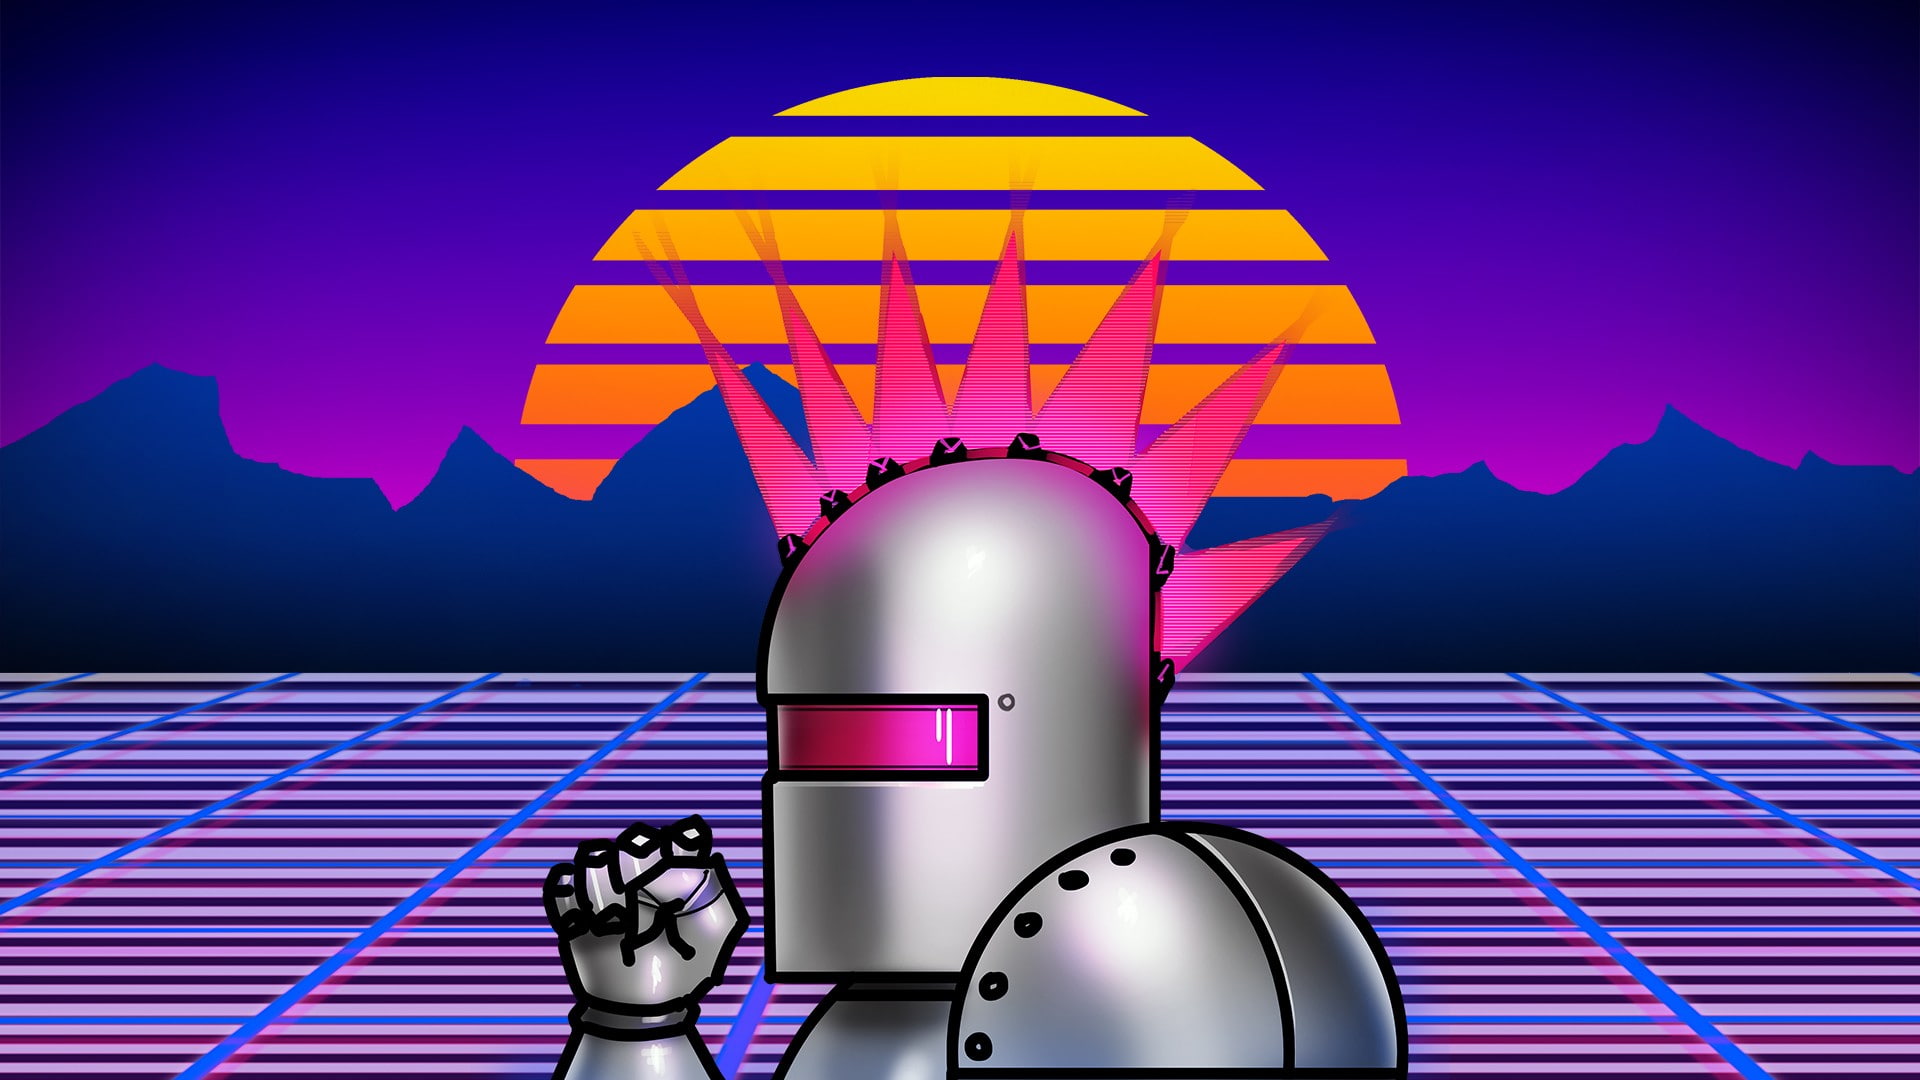 neon lazer mohawk 1980s retro games robot grid digital art sunset sun colorful